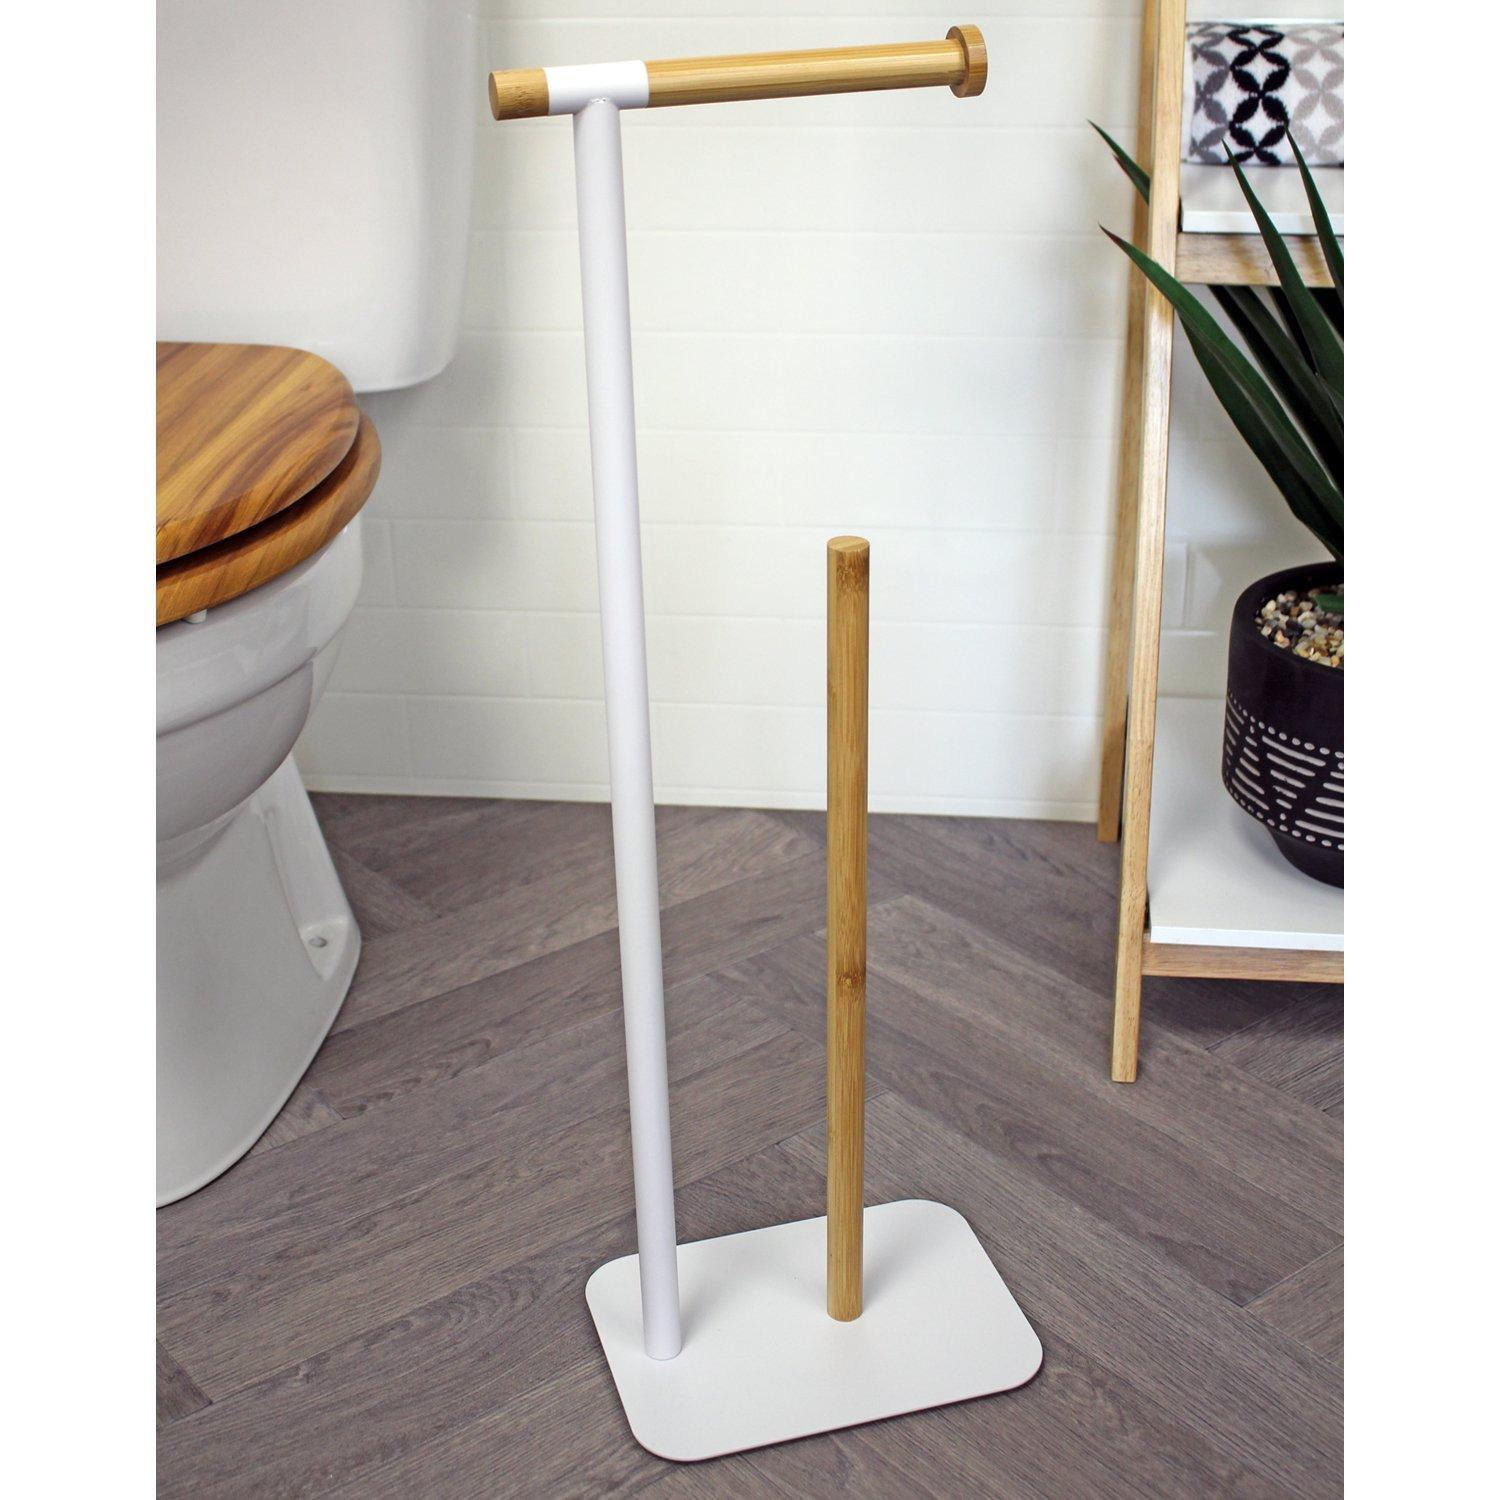 'Sonata' Toilet Roll & Spare Paper Holder Freestanding - image 1